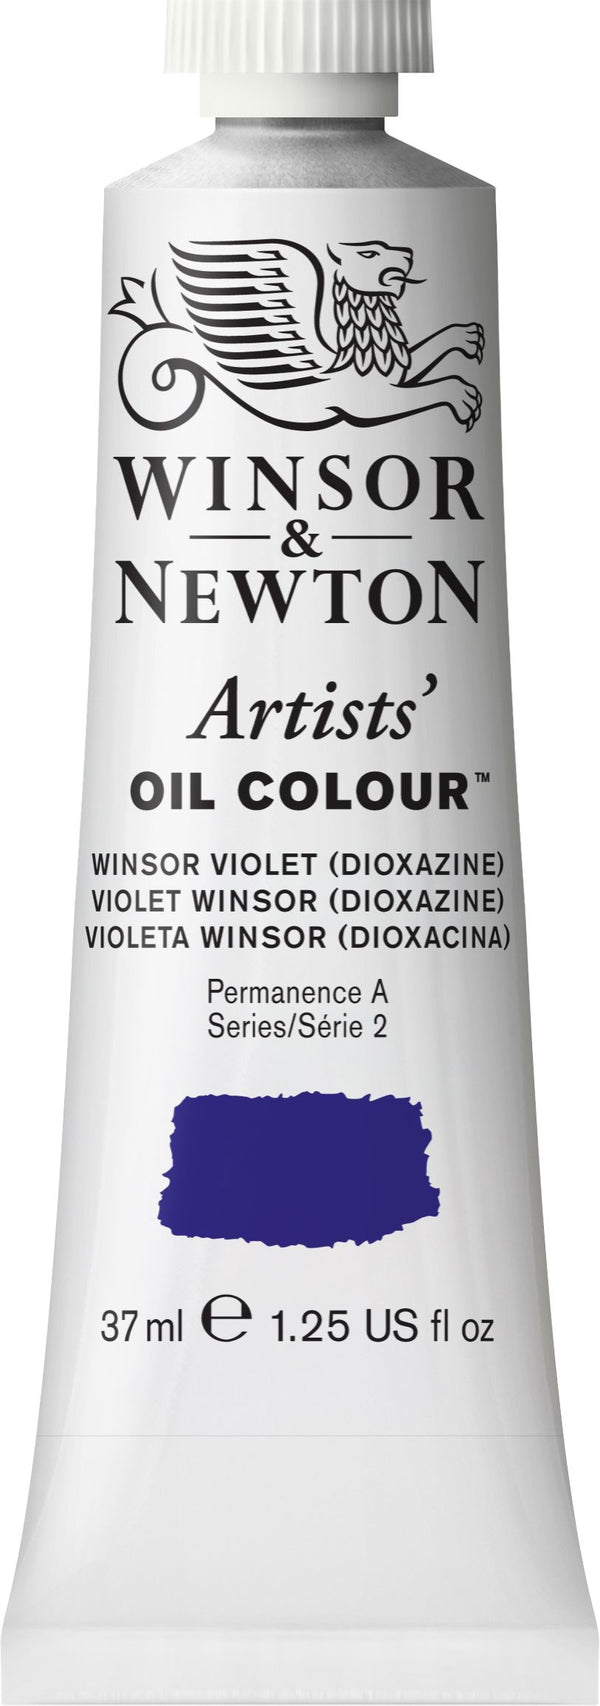 Winsor Newton Artist Oil Winsor Violet (Dioxazine) 733 - Series 2 - 37ml tube